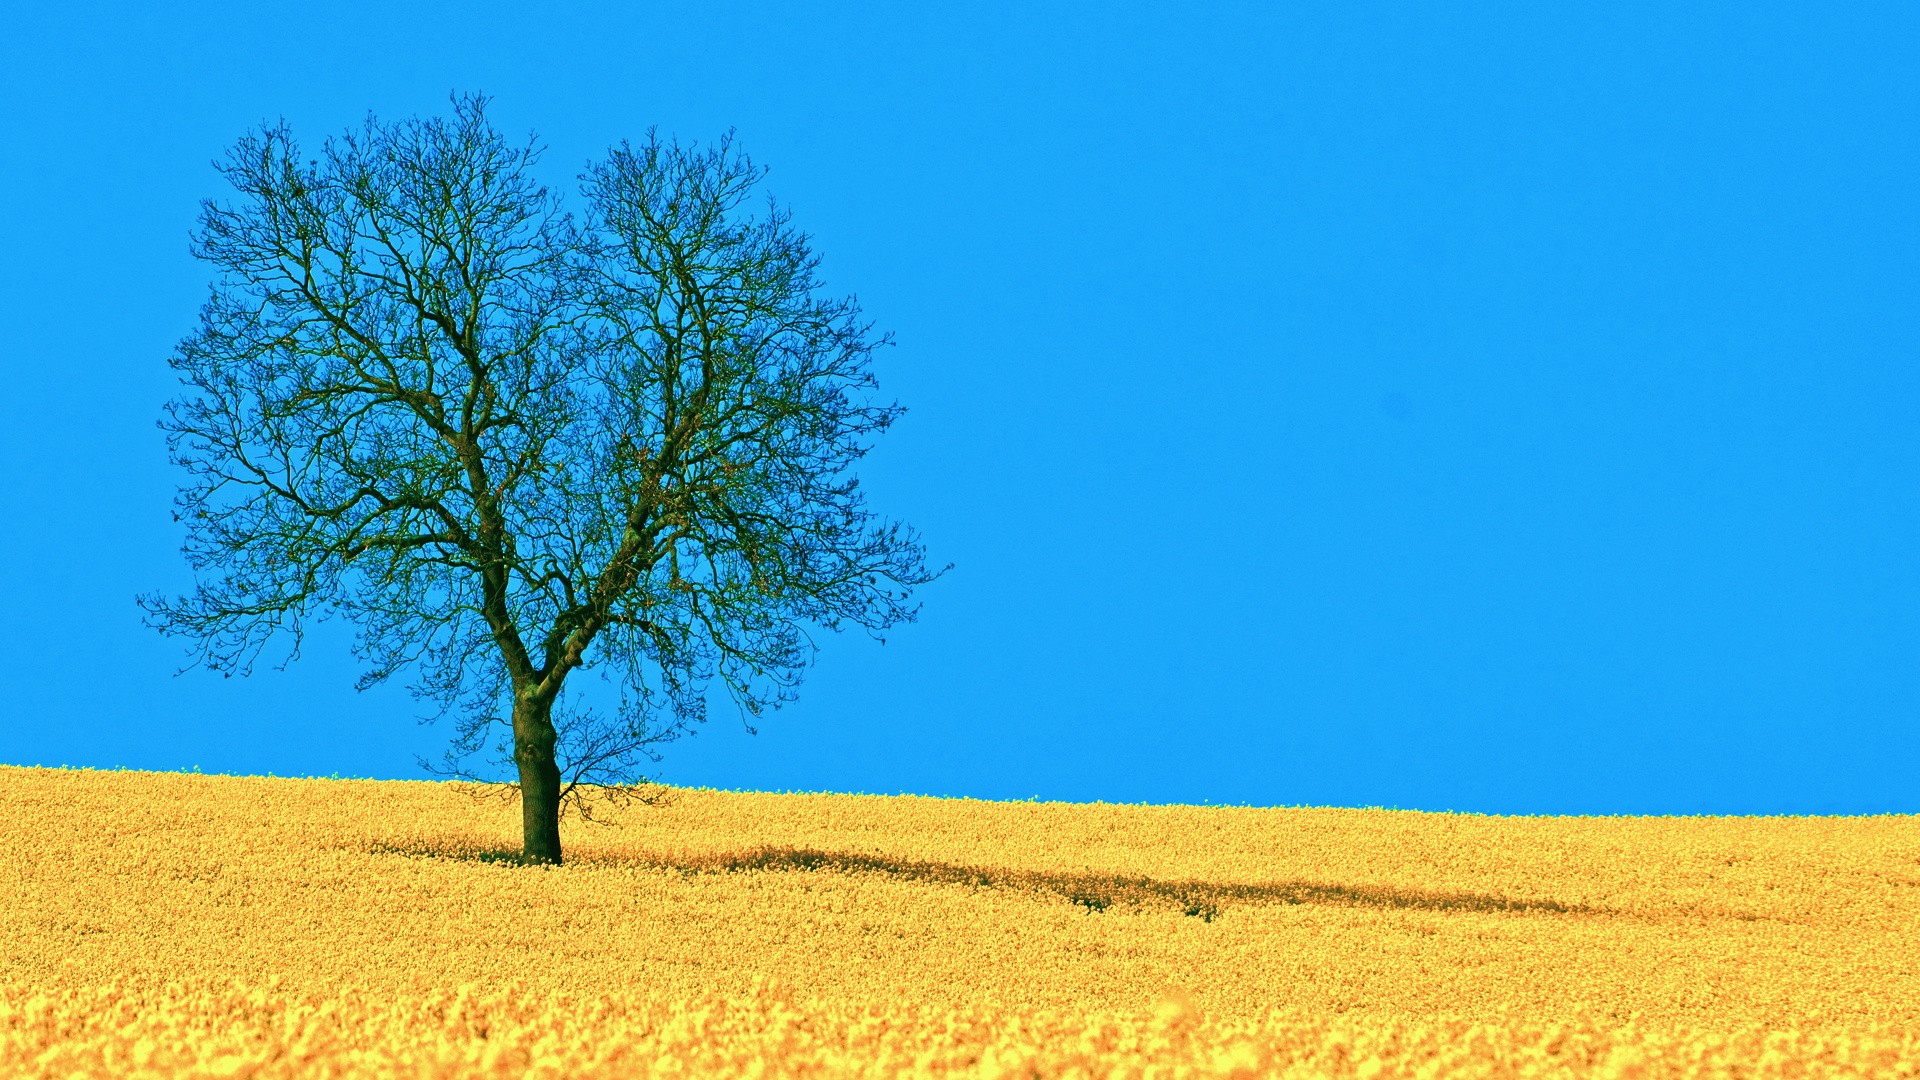 landscapes_nature_horizon_trees_blue_skies_lone_tree_1920x1080.jpg